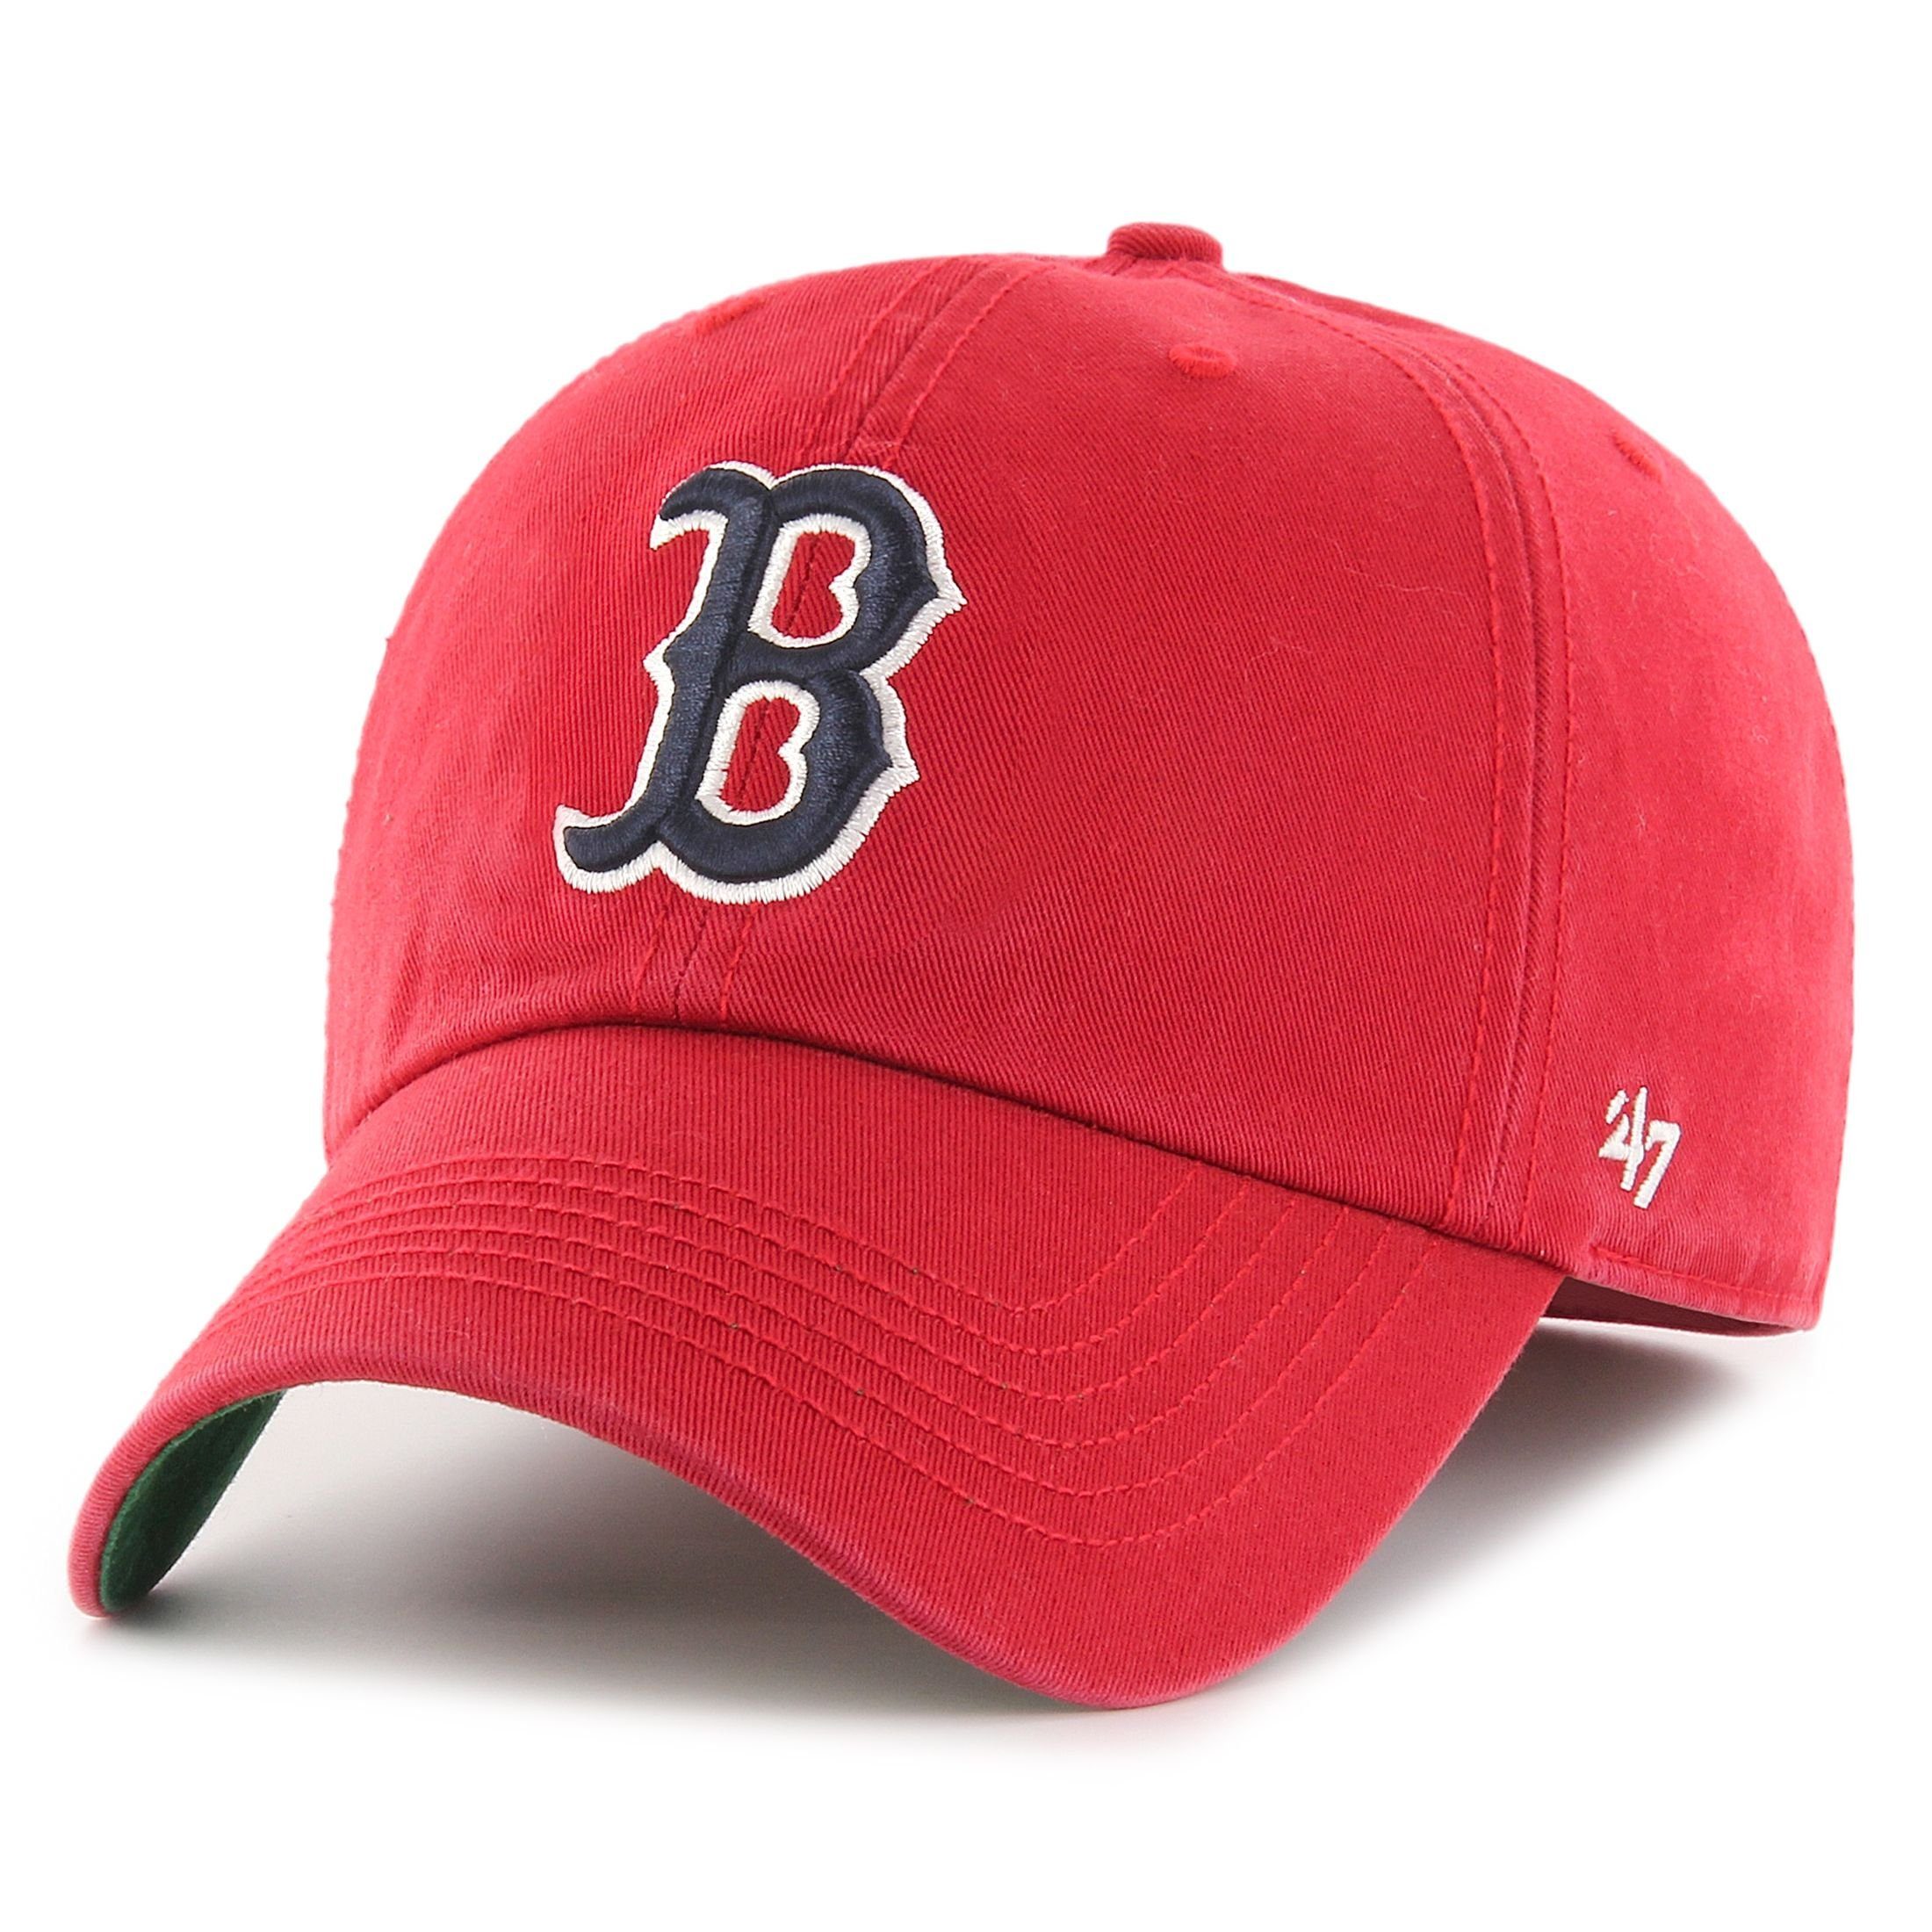 '47 Brand Flex Cap Curved FRANCHISE Boston Red Sox